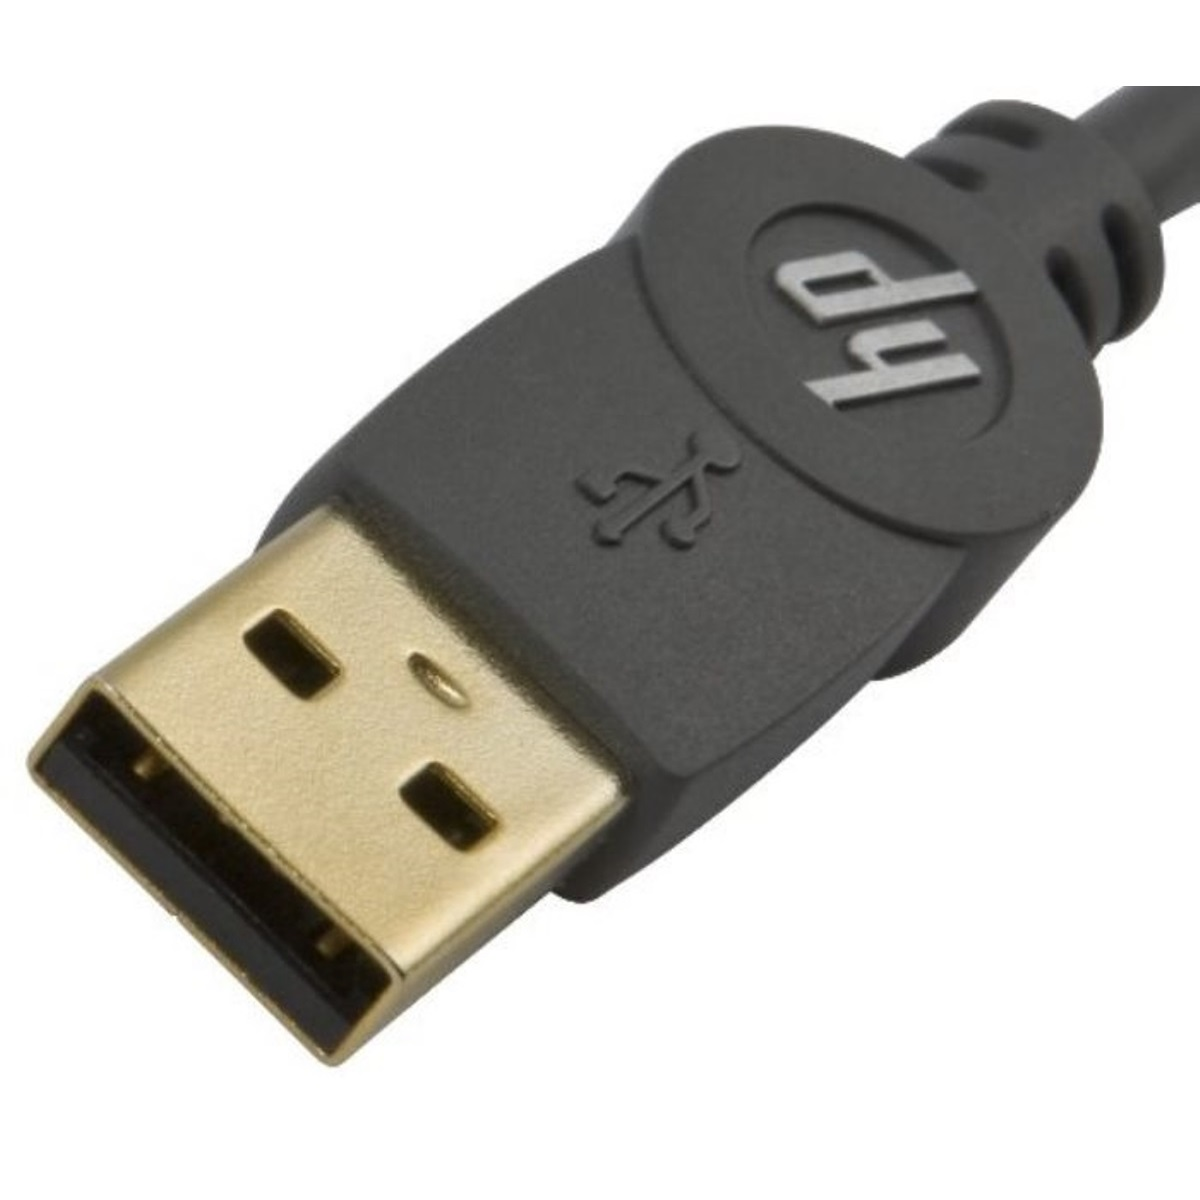 MONSTER CABLE Kabel, 0,9m Schwarz High-Speed Mini-USB-Kabel HP Mini-USB